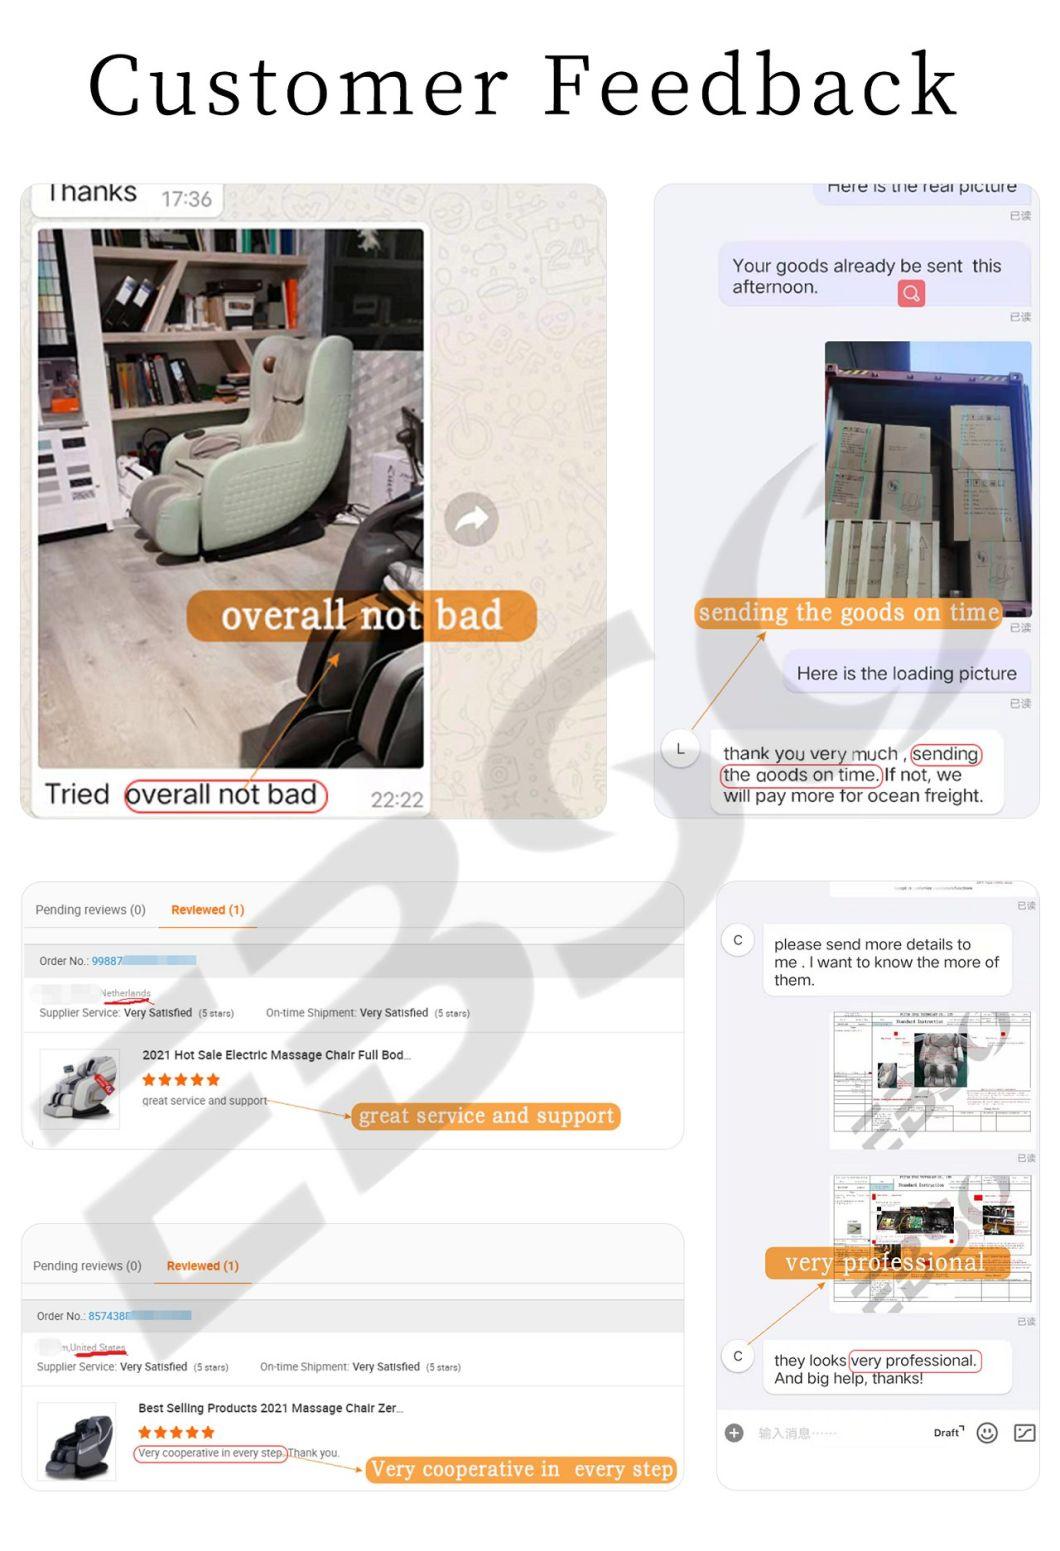 Zero Gravity Recliner Chair Wholesale Price Full Body Massage Chair